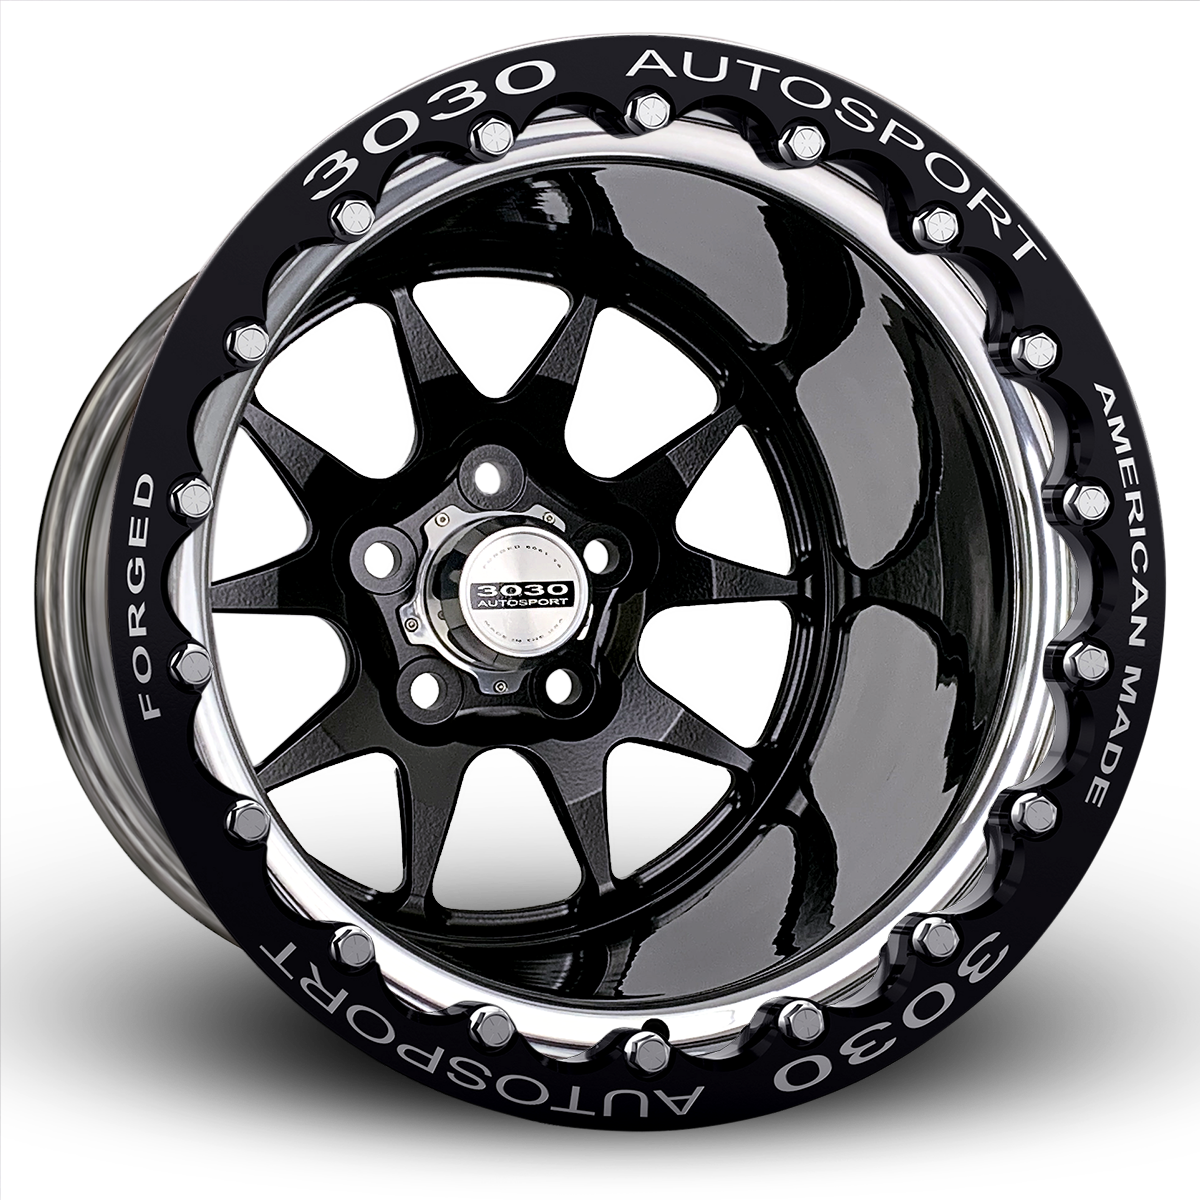 MACH-10 Double-Beadlock Wheel, Size: 15x15", Bolt Pattern: 5x5", Backspace: 7" [Black/Polished]